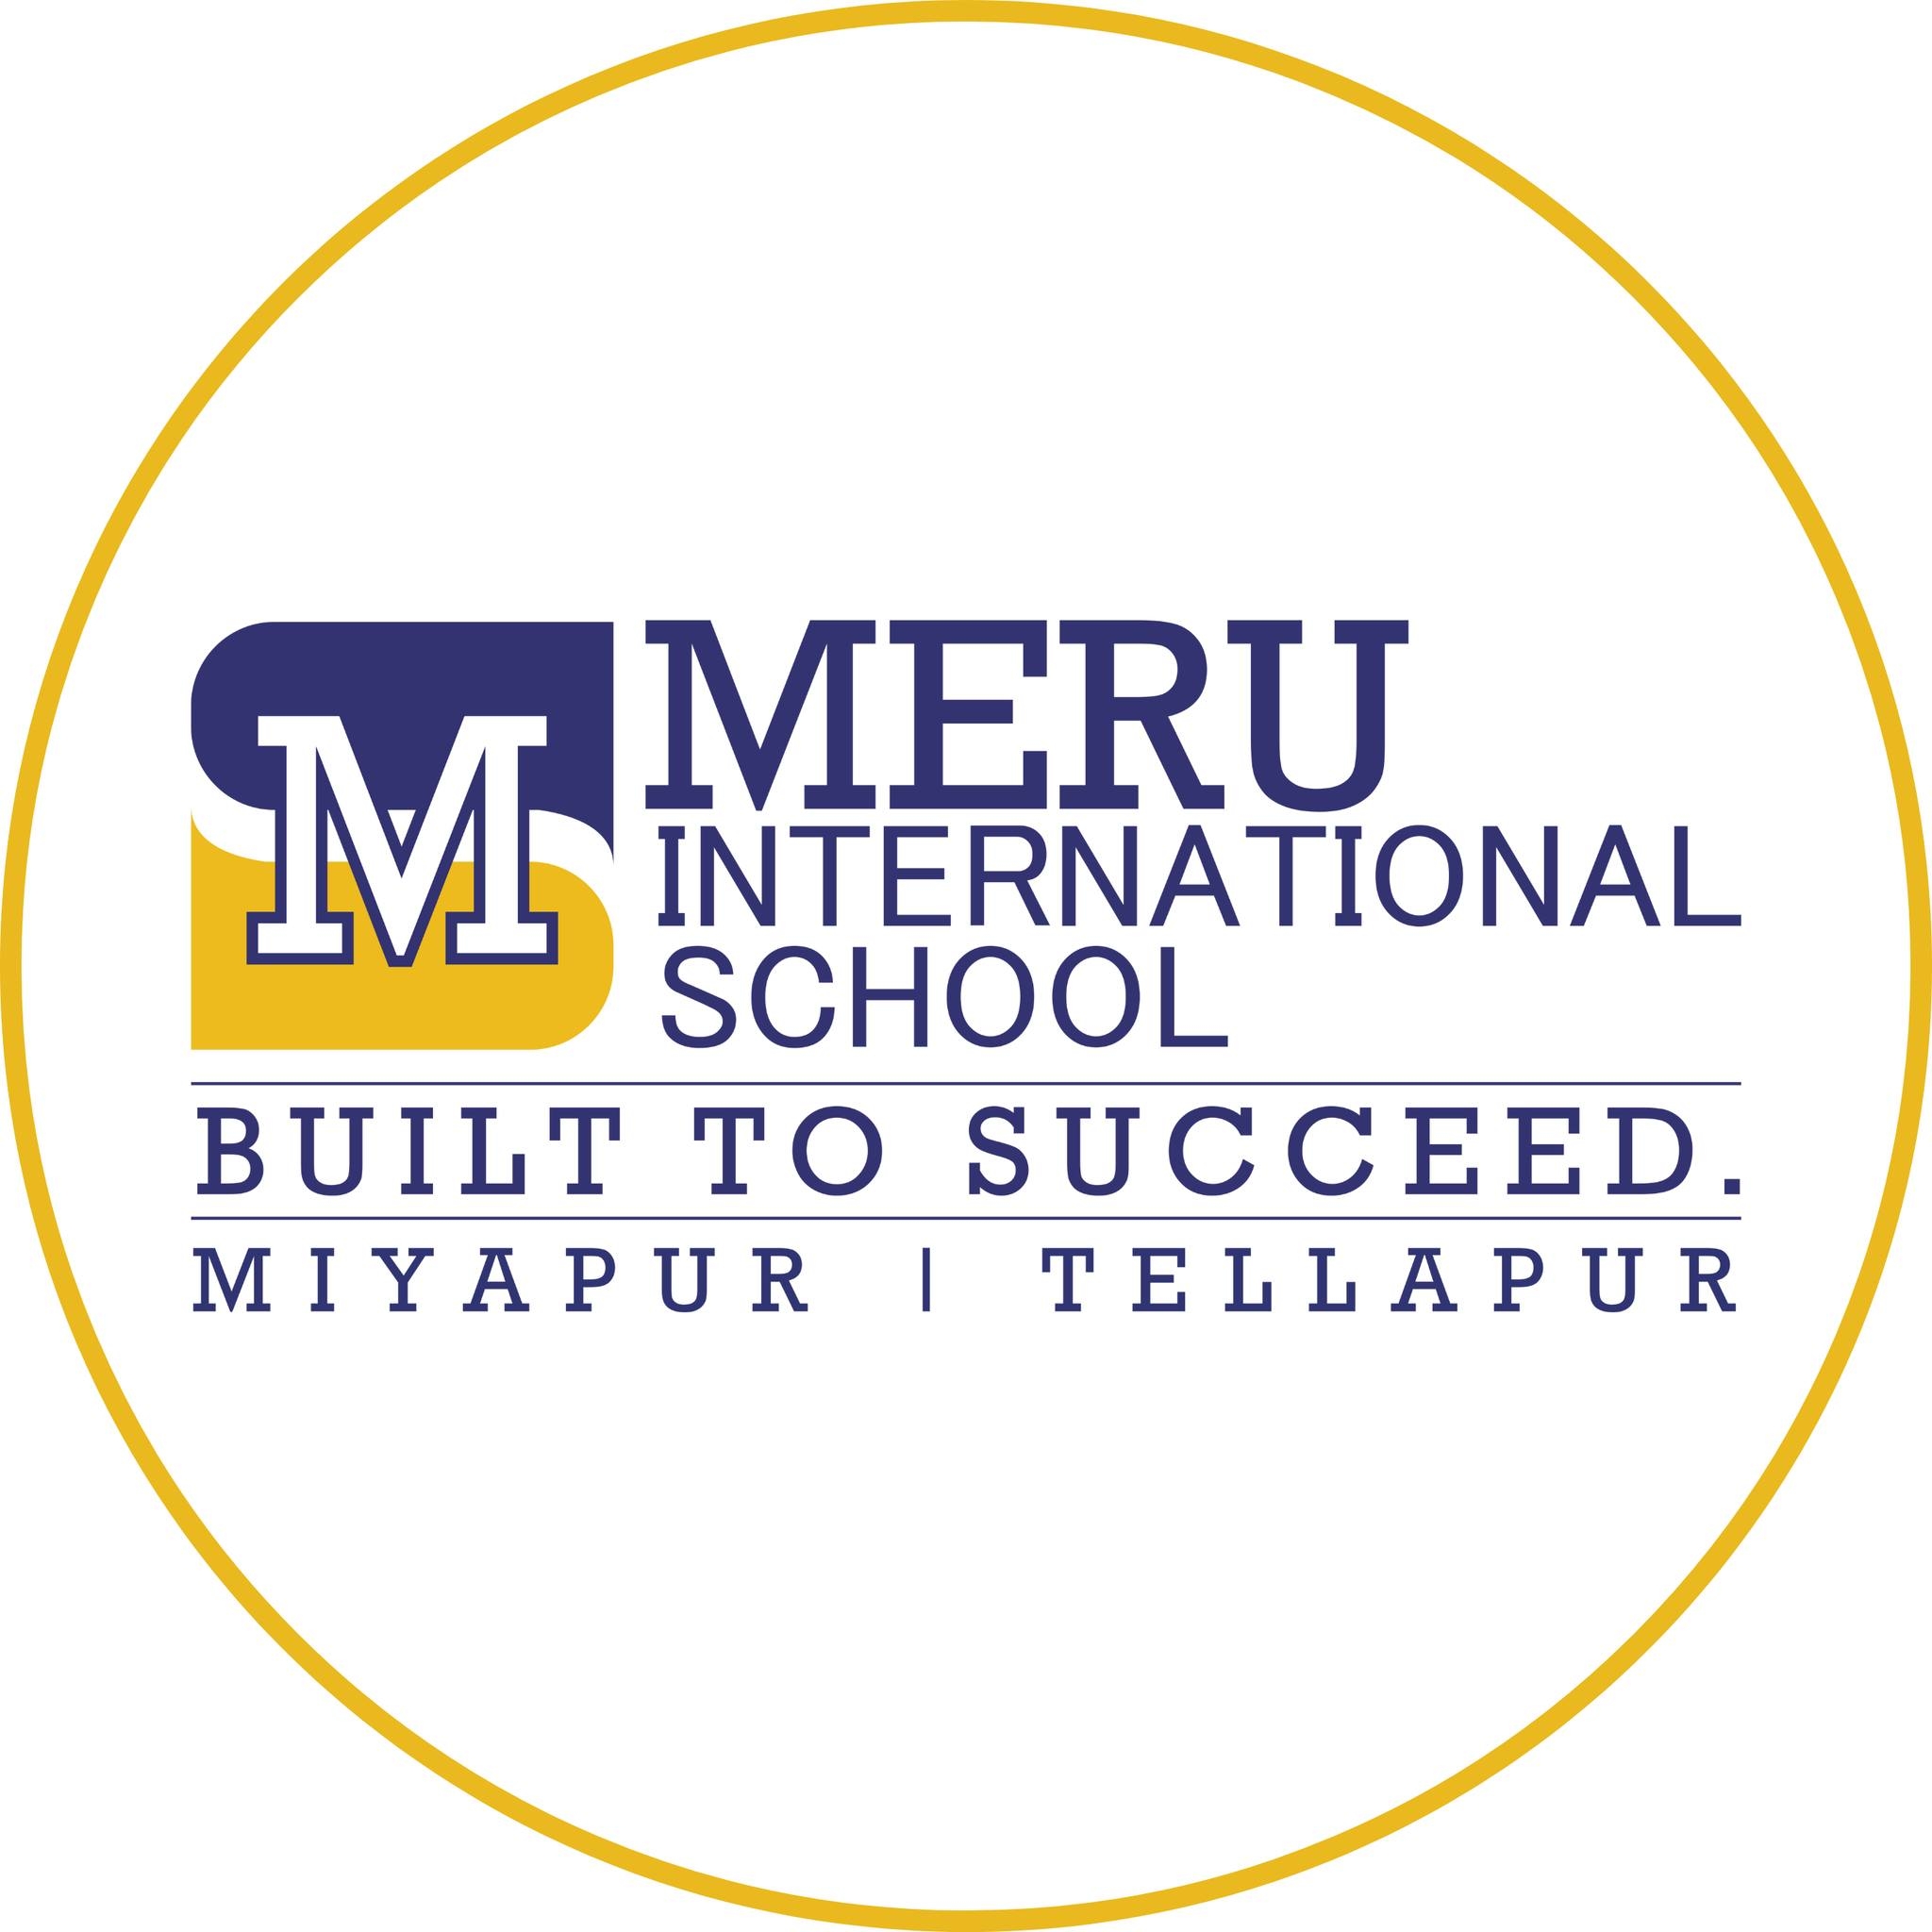 Meru International School